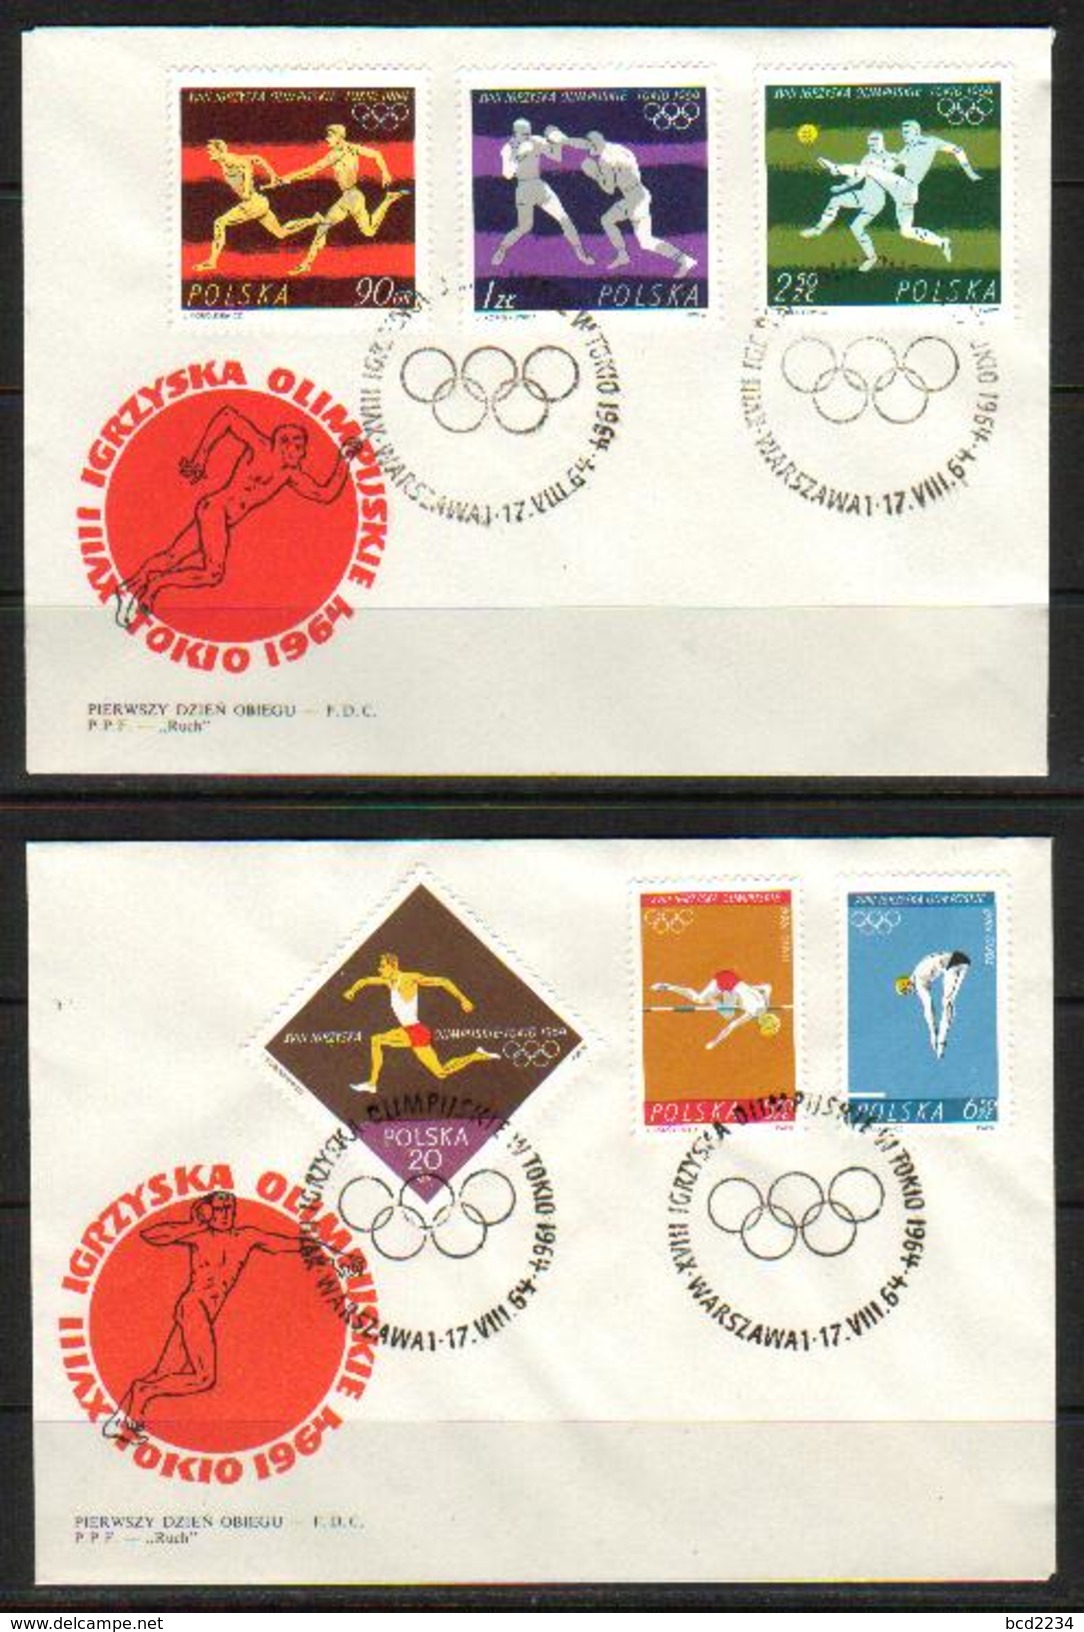 POLAND FDC 1964 TOKYO JAPAN OLYMPICS & MS Weight Lifting Boxing Football High Jump Diving Rowing Running Soccer - Plongée